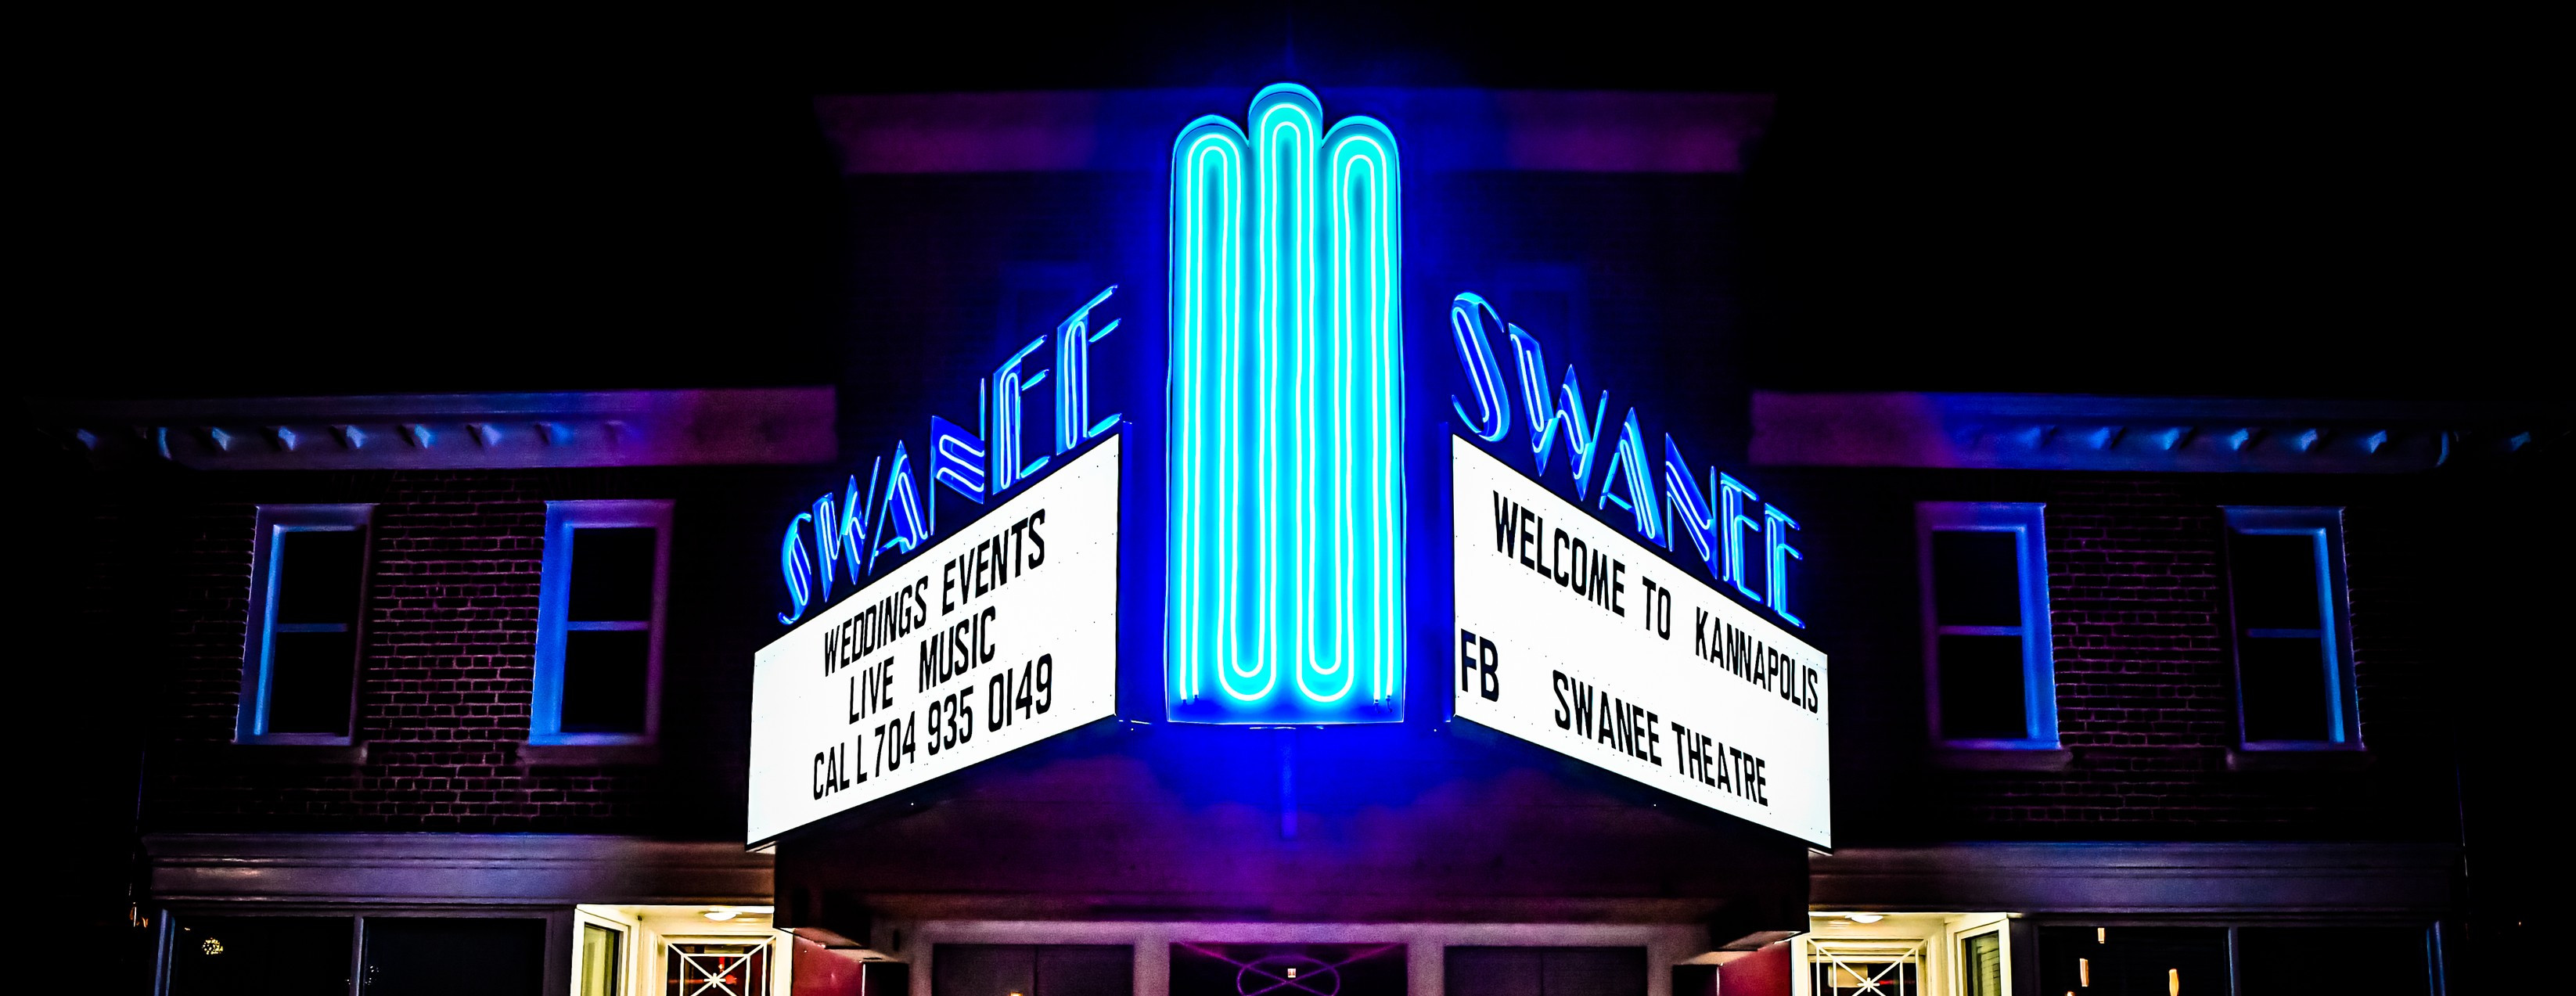 Swanee Theatre, Kannapolis, NC Booking Information & Music Venue Reviews